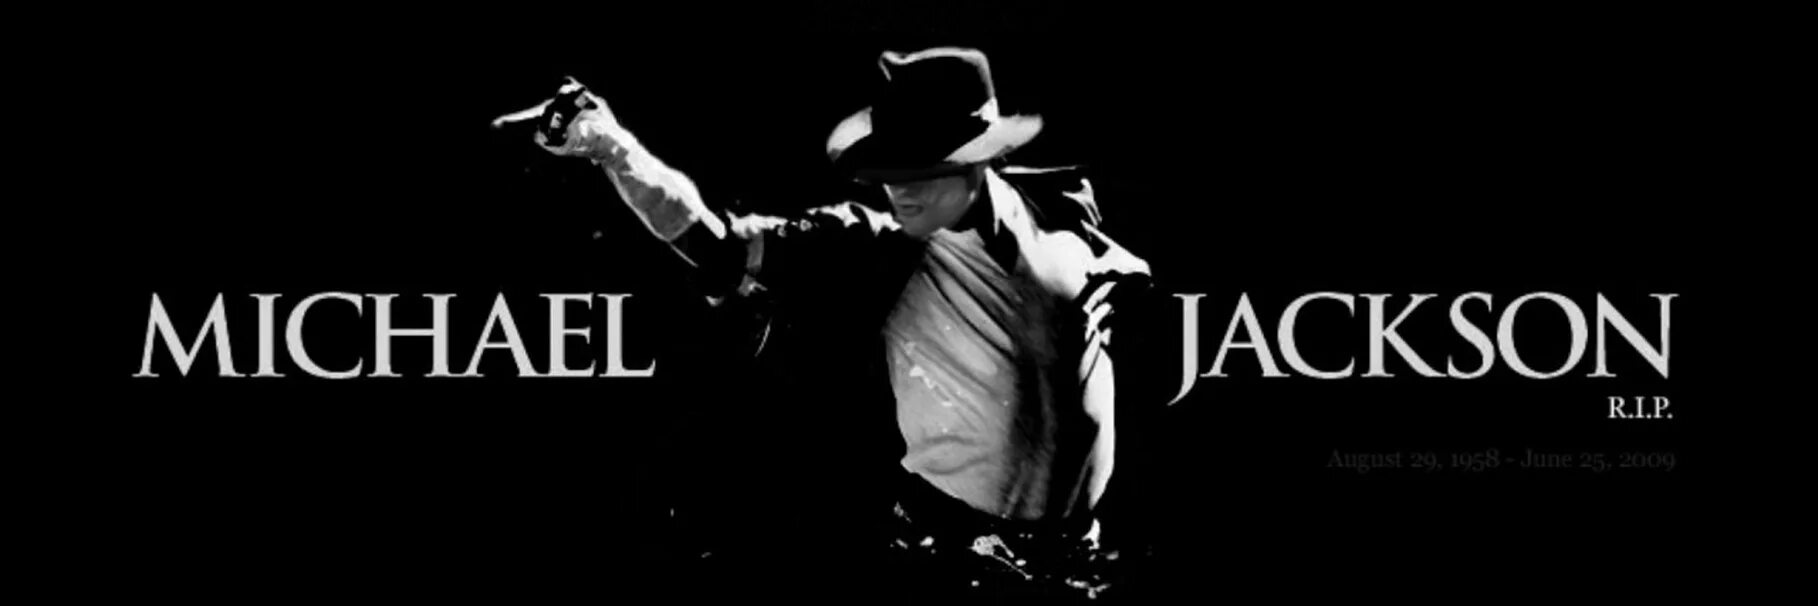 Michael jackson best. Michael Jackson Rip. Jackson Michael лейбл. Michael Jackson логотип.